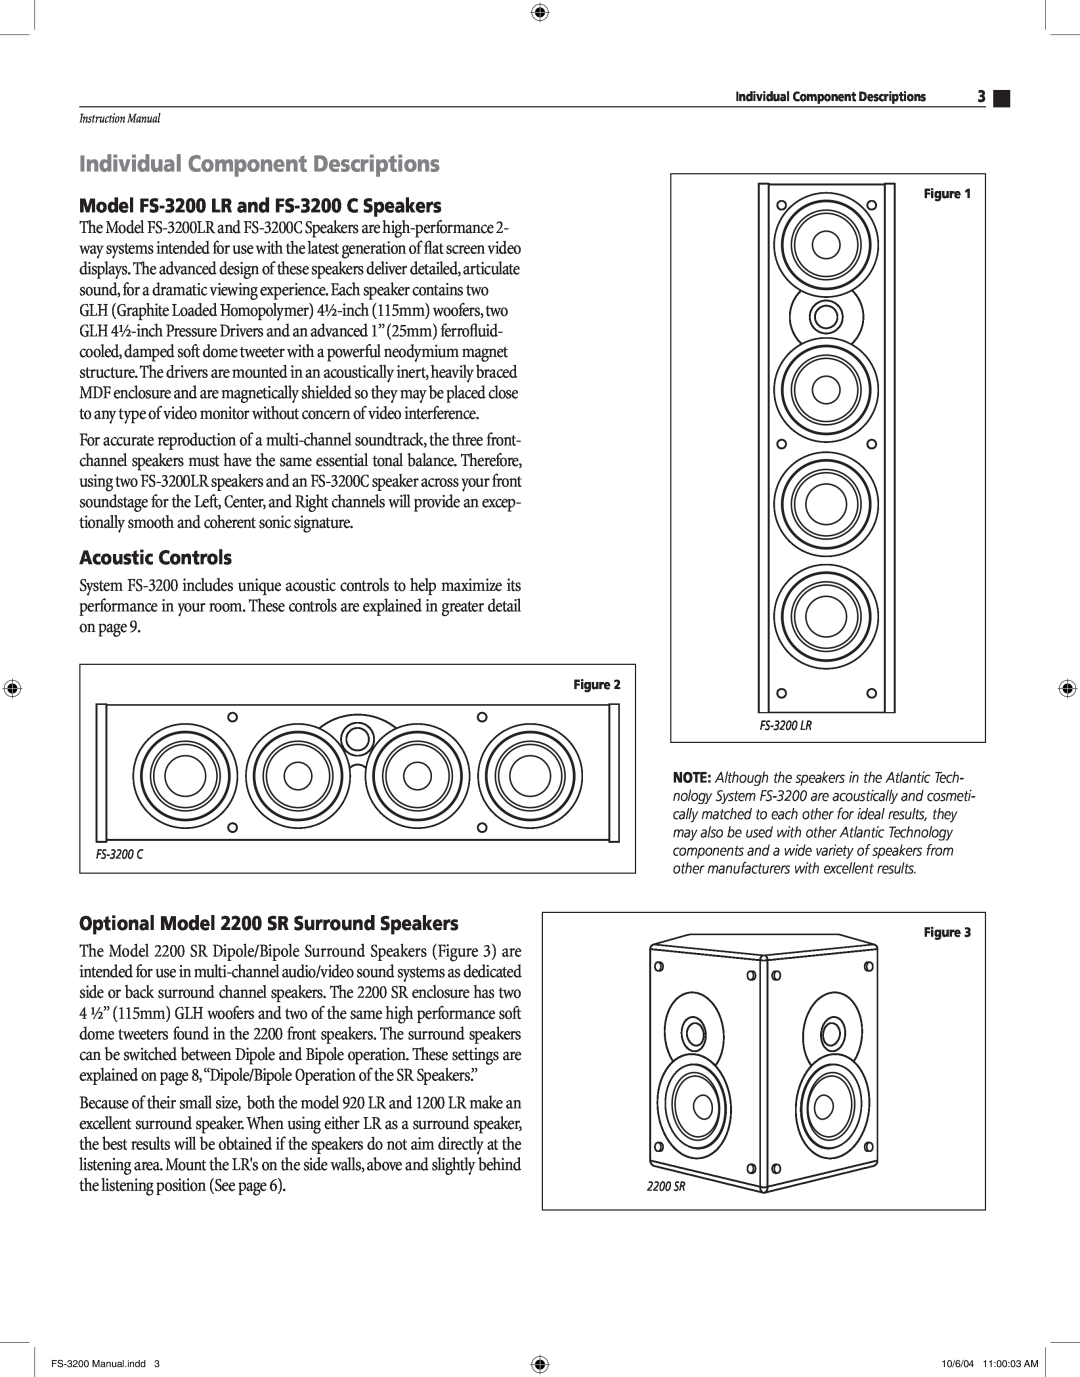 Atlantic Technology Individual Component Descriptions, Model FS-3200LR and FS-3200C Speakers, Acoustic Controls 